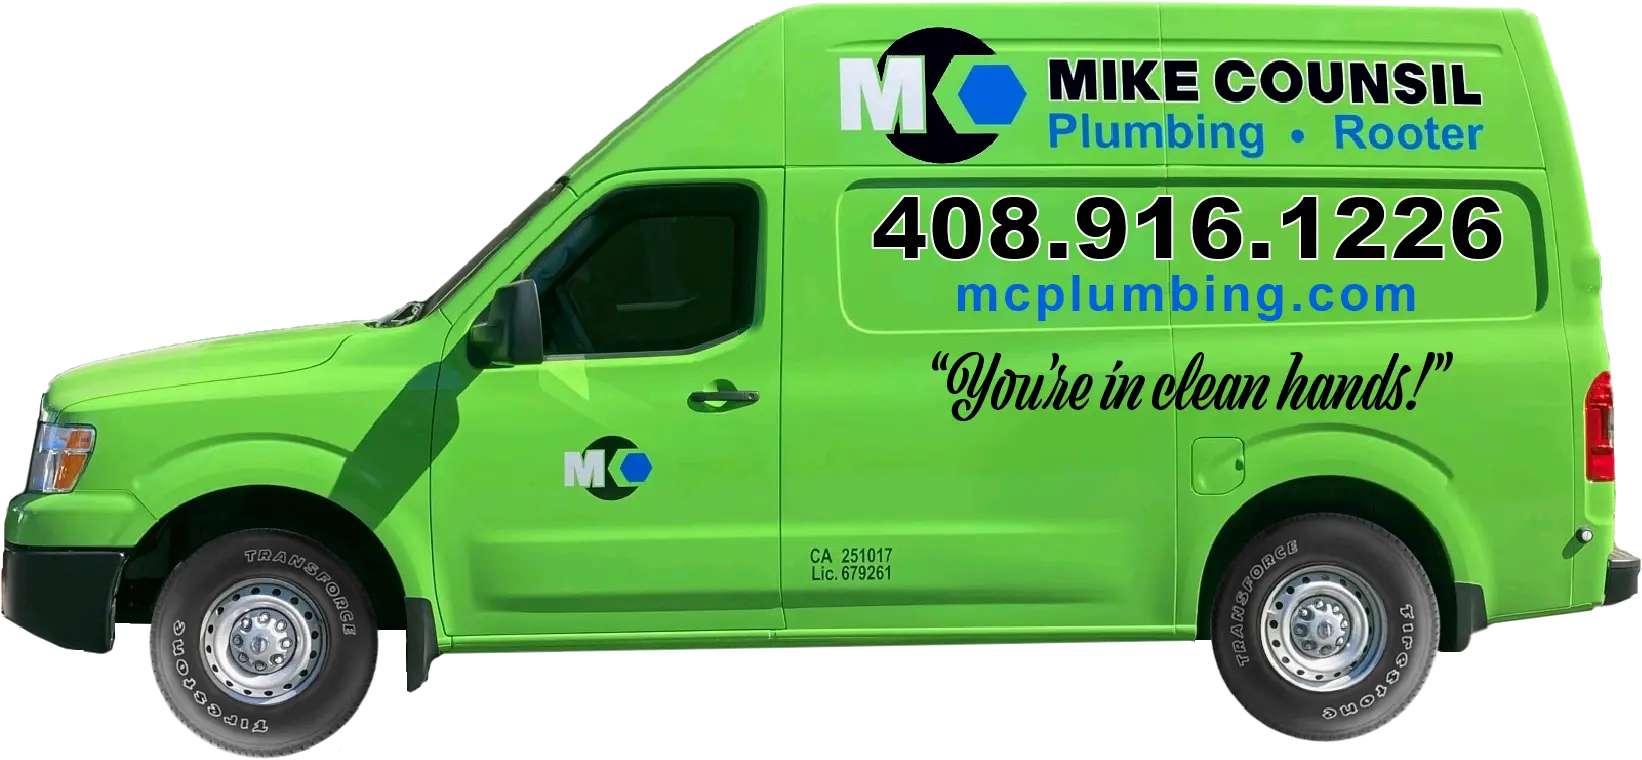 Mike_Counsil_Plumbing_Nissan_Truck